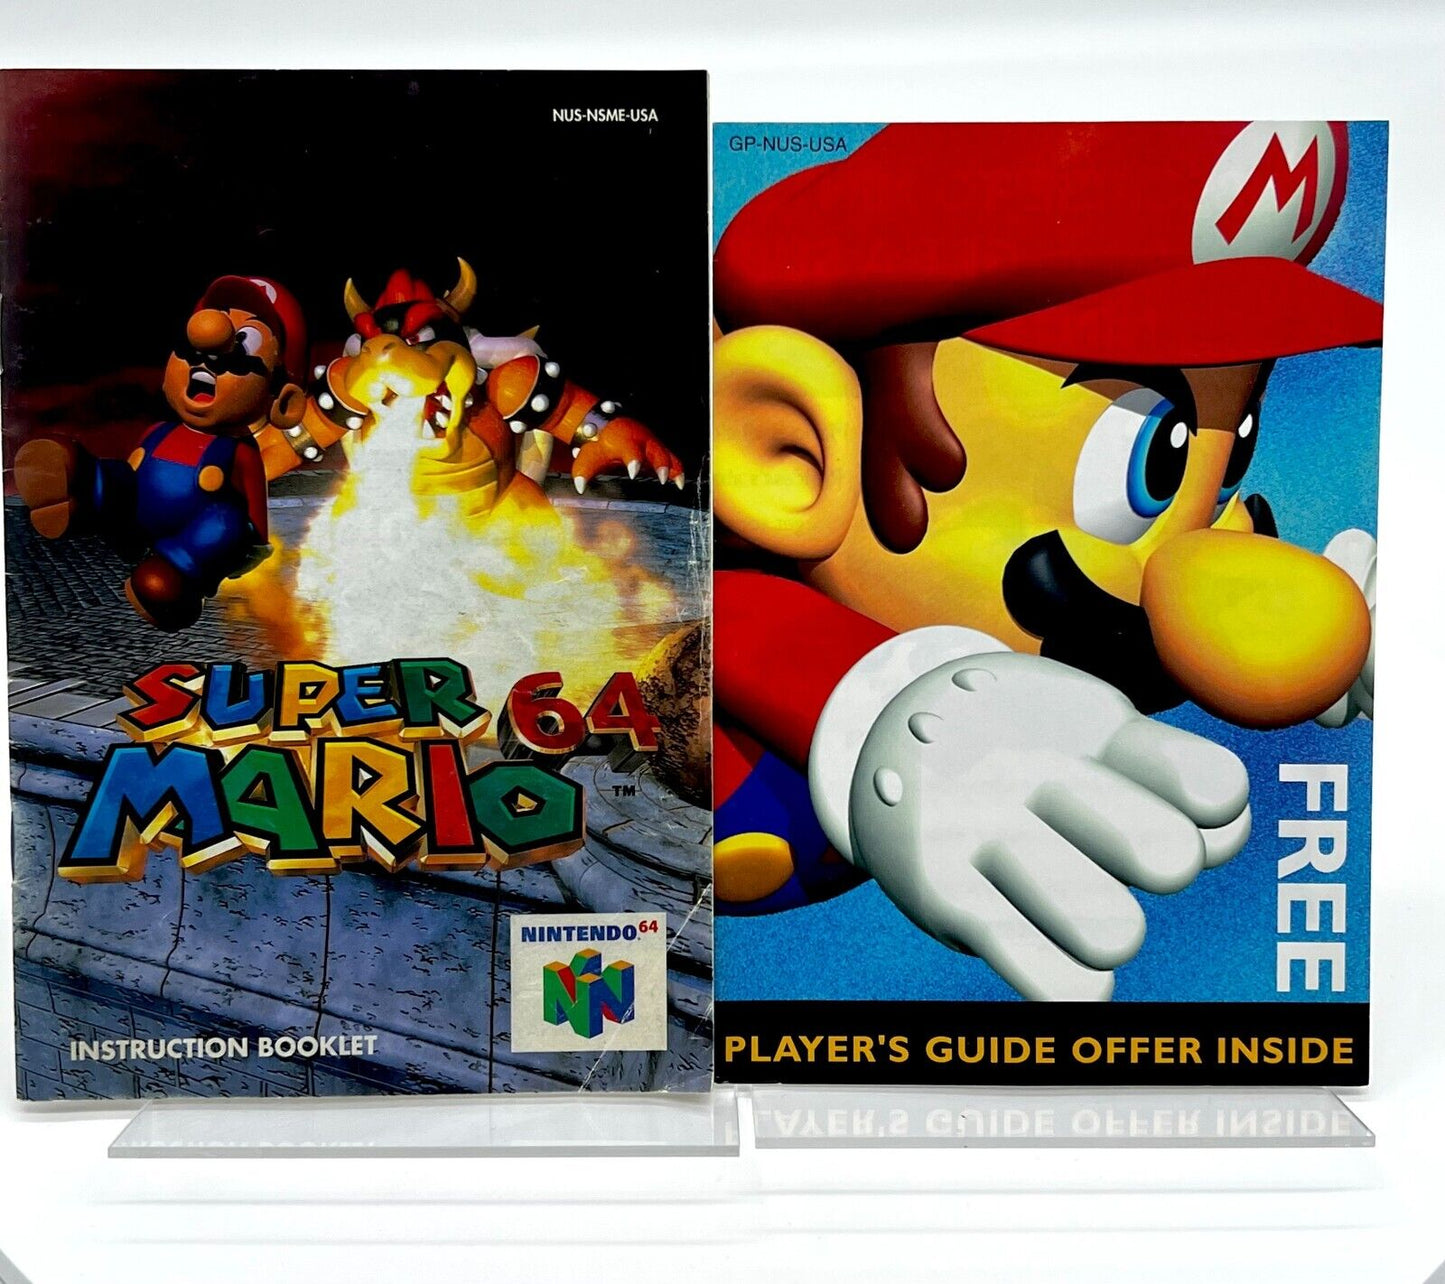 Super Mario 64 Nintendo 64 N64 Complete In Box CIB VIDEO GAME EXCELLENT CLEAN